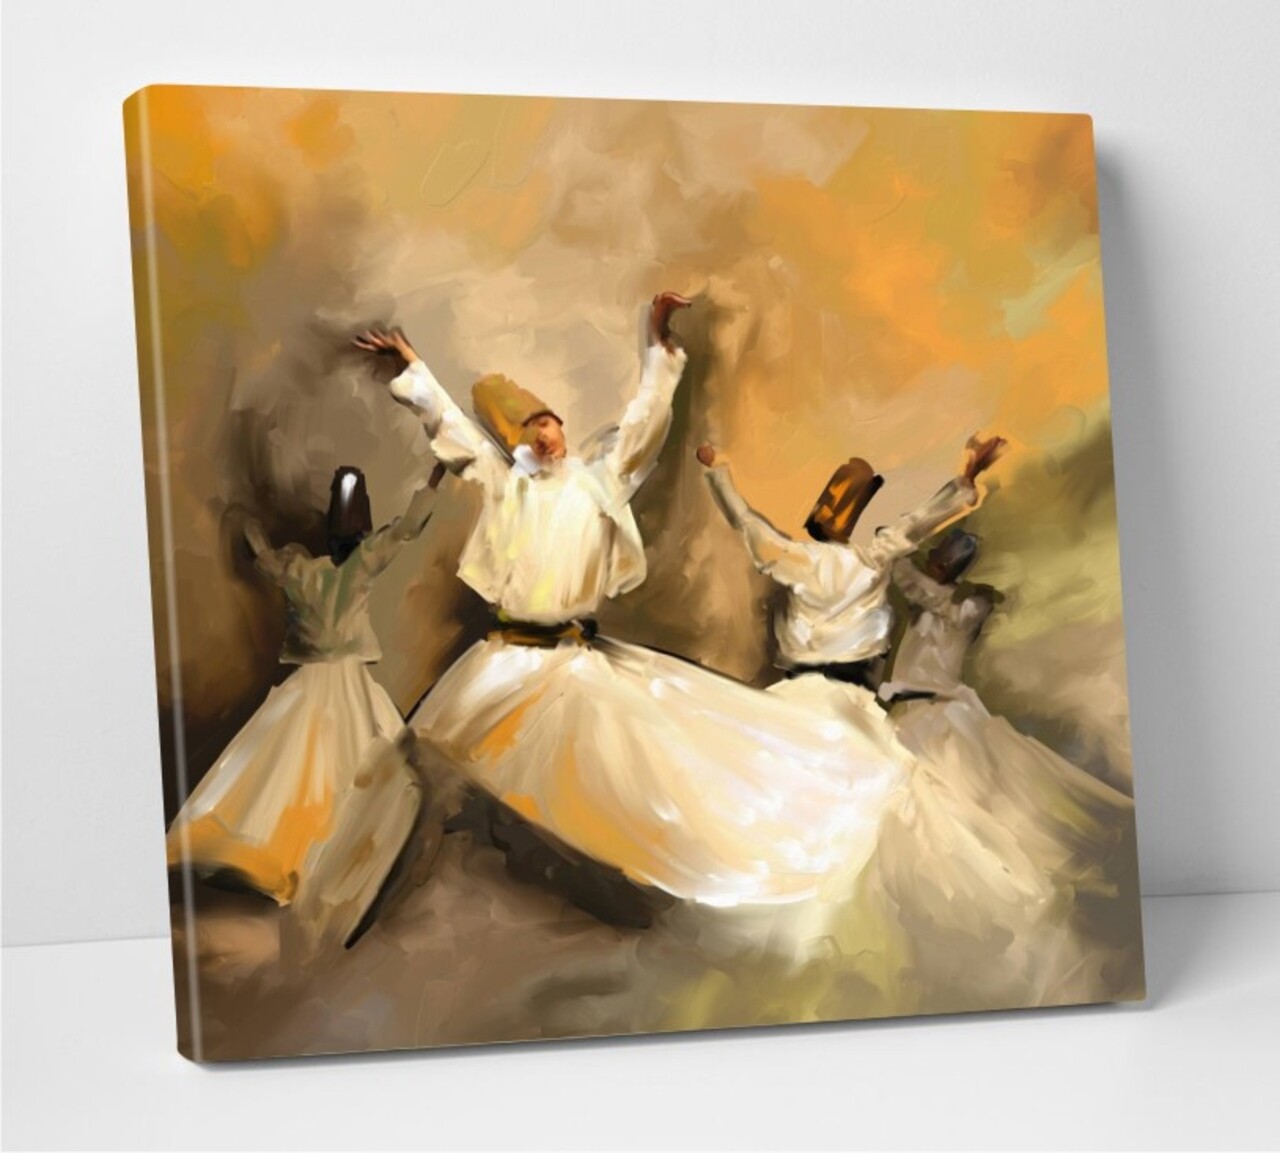 Tablou decorativ Dance, Modacanvas, 50x50 cm, canvas, multicolor